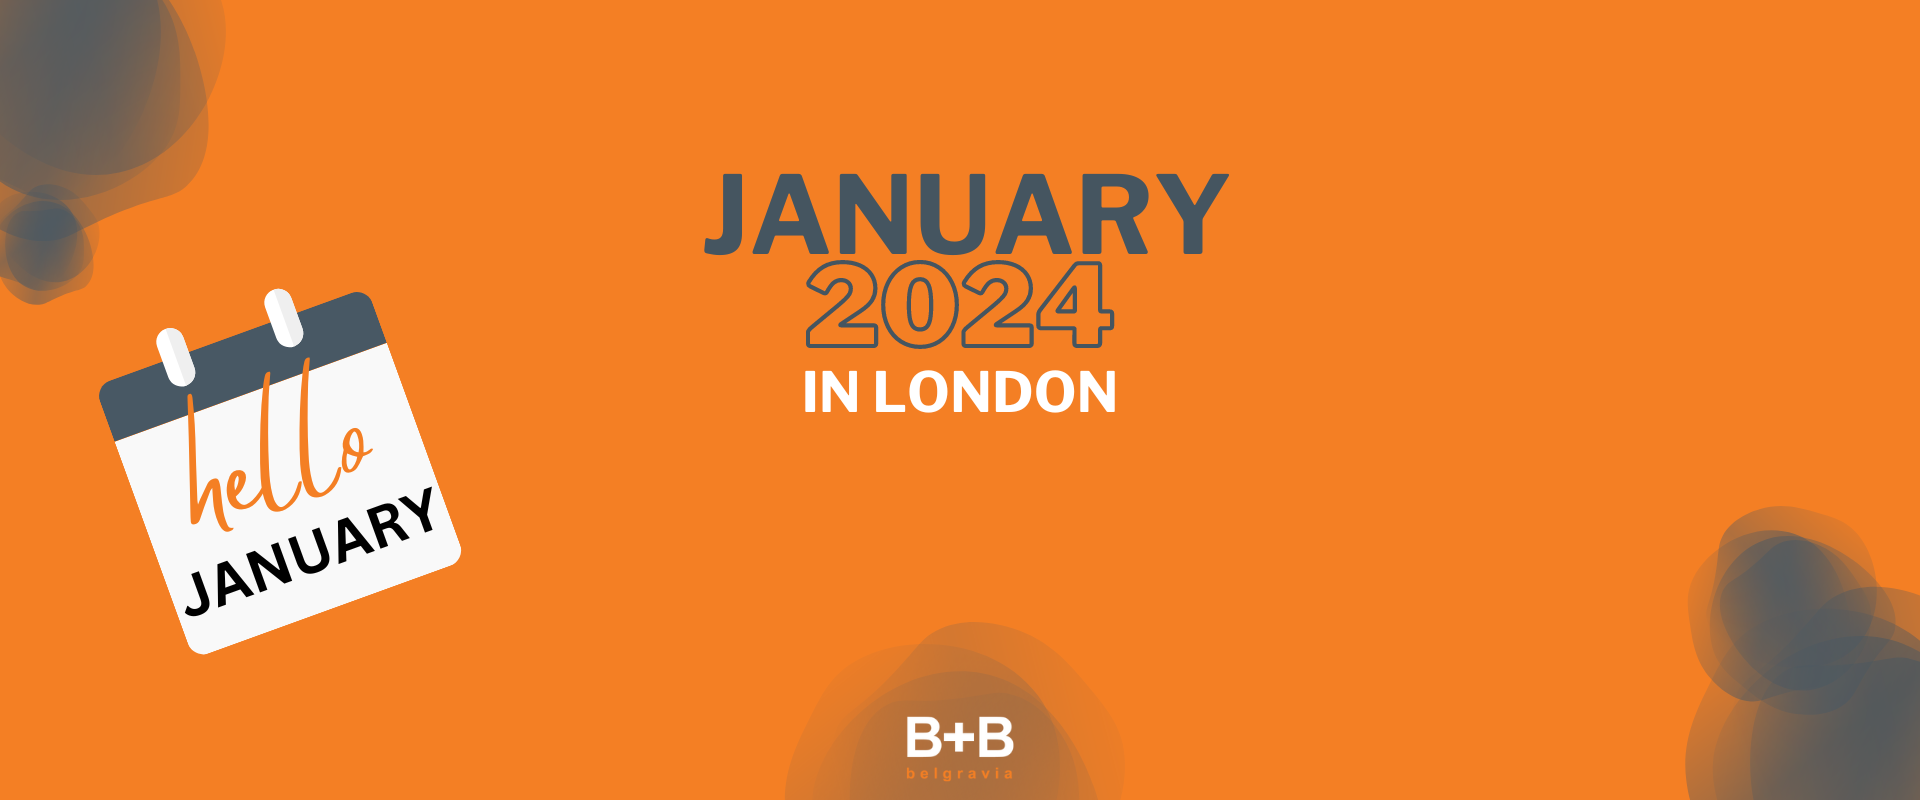 January 2024 in London - B+B Belgravia